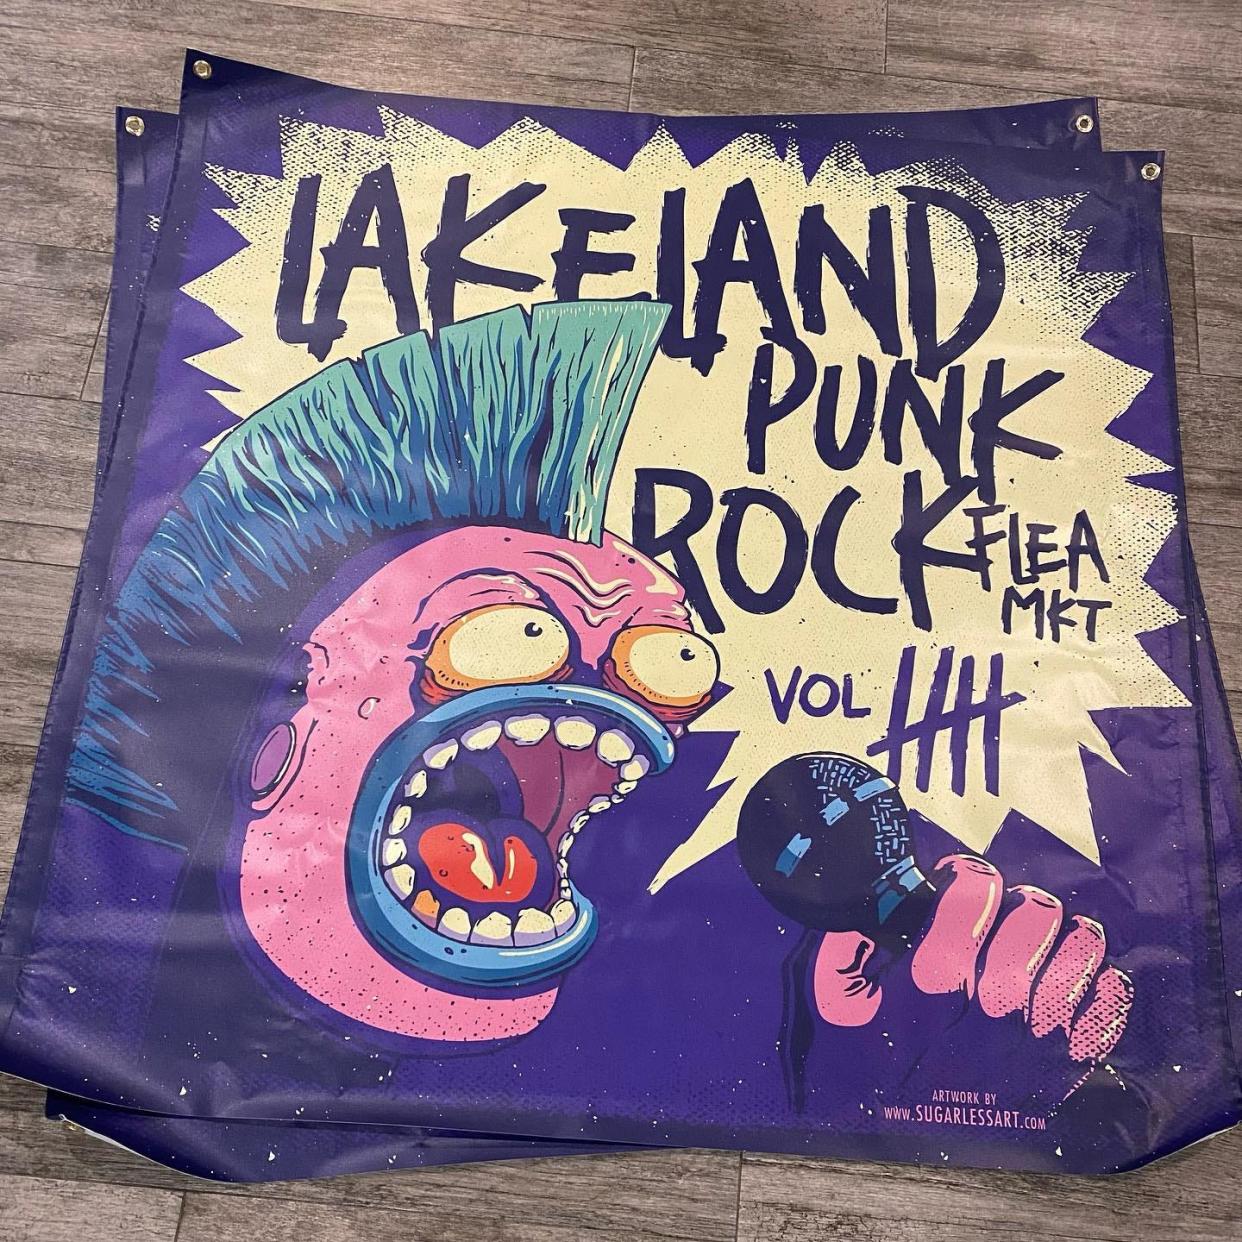 Lakeland Punk Rock Flea Market is Sunday